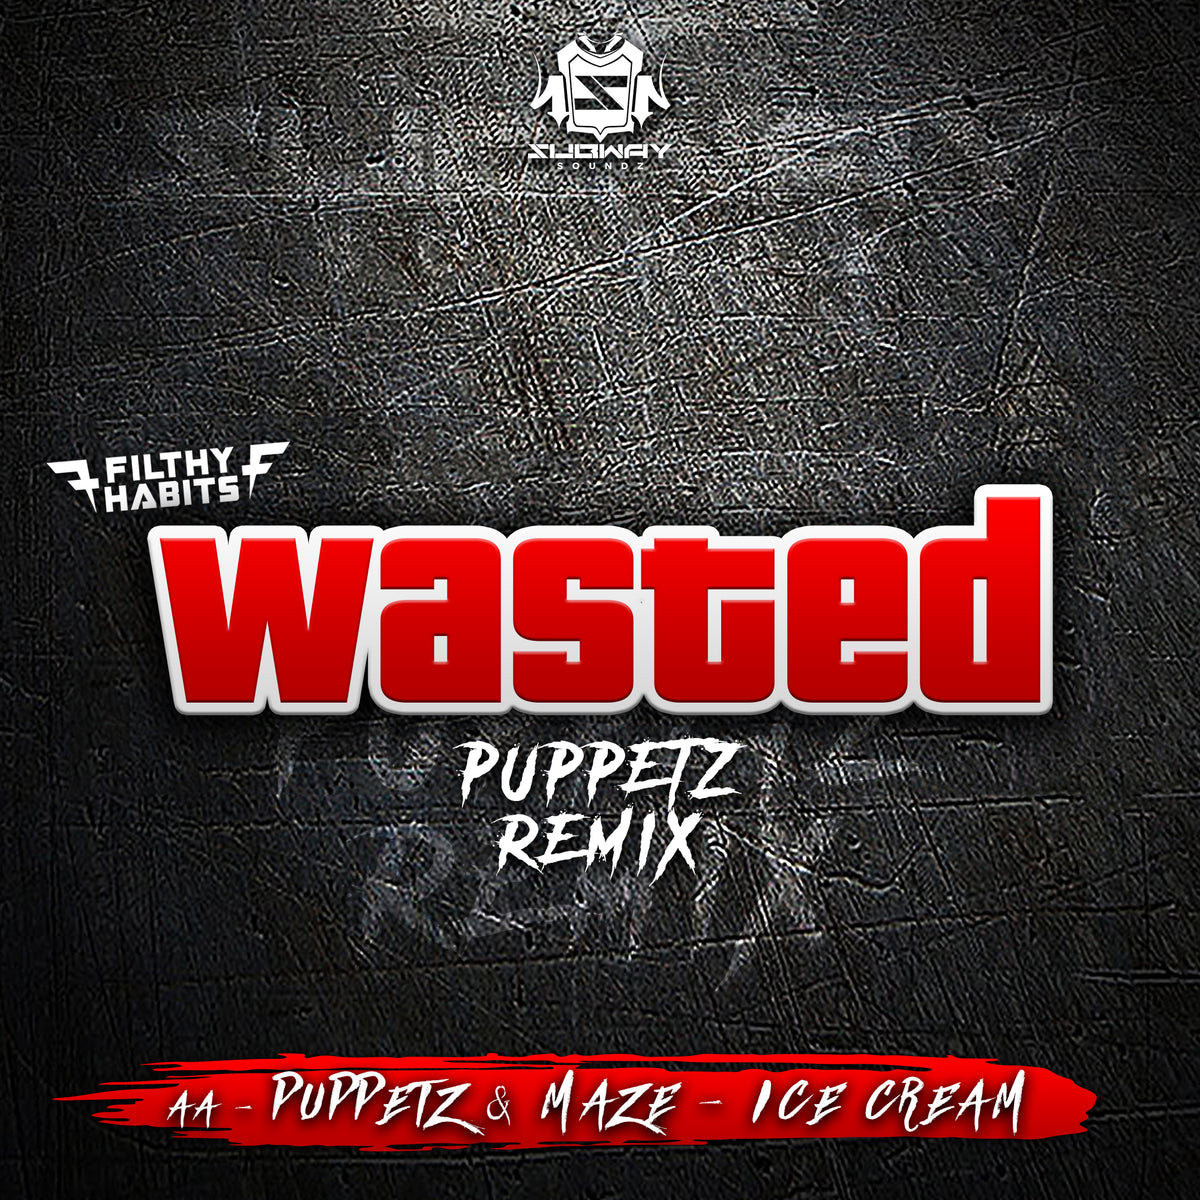 SSLD 079 - Filthy Habits 'Wasted' (Puppetz Remix) | Puppetz & Maze 'Ice Cream'